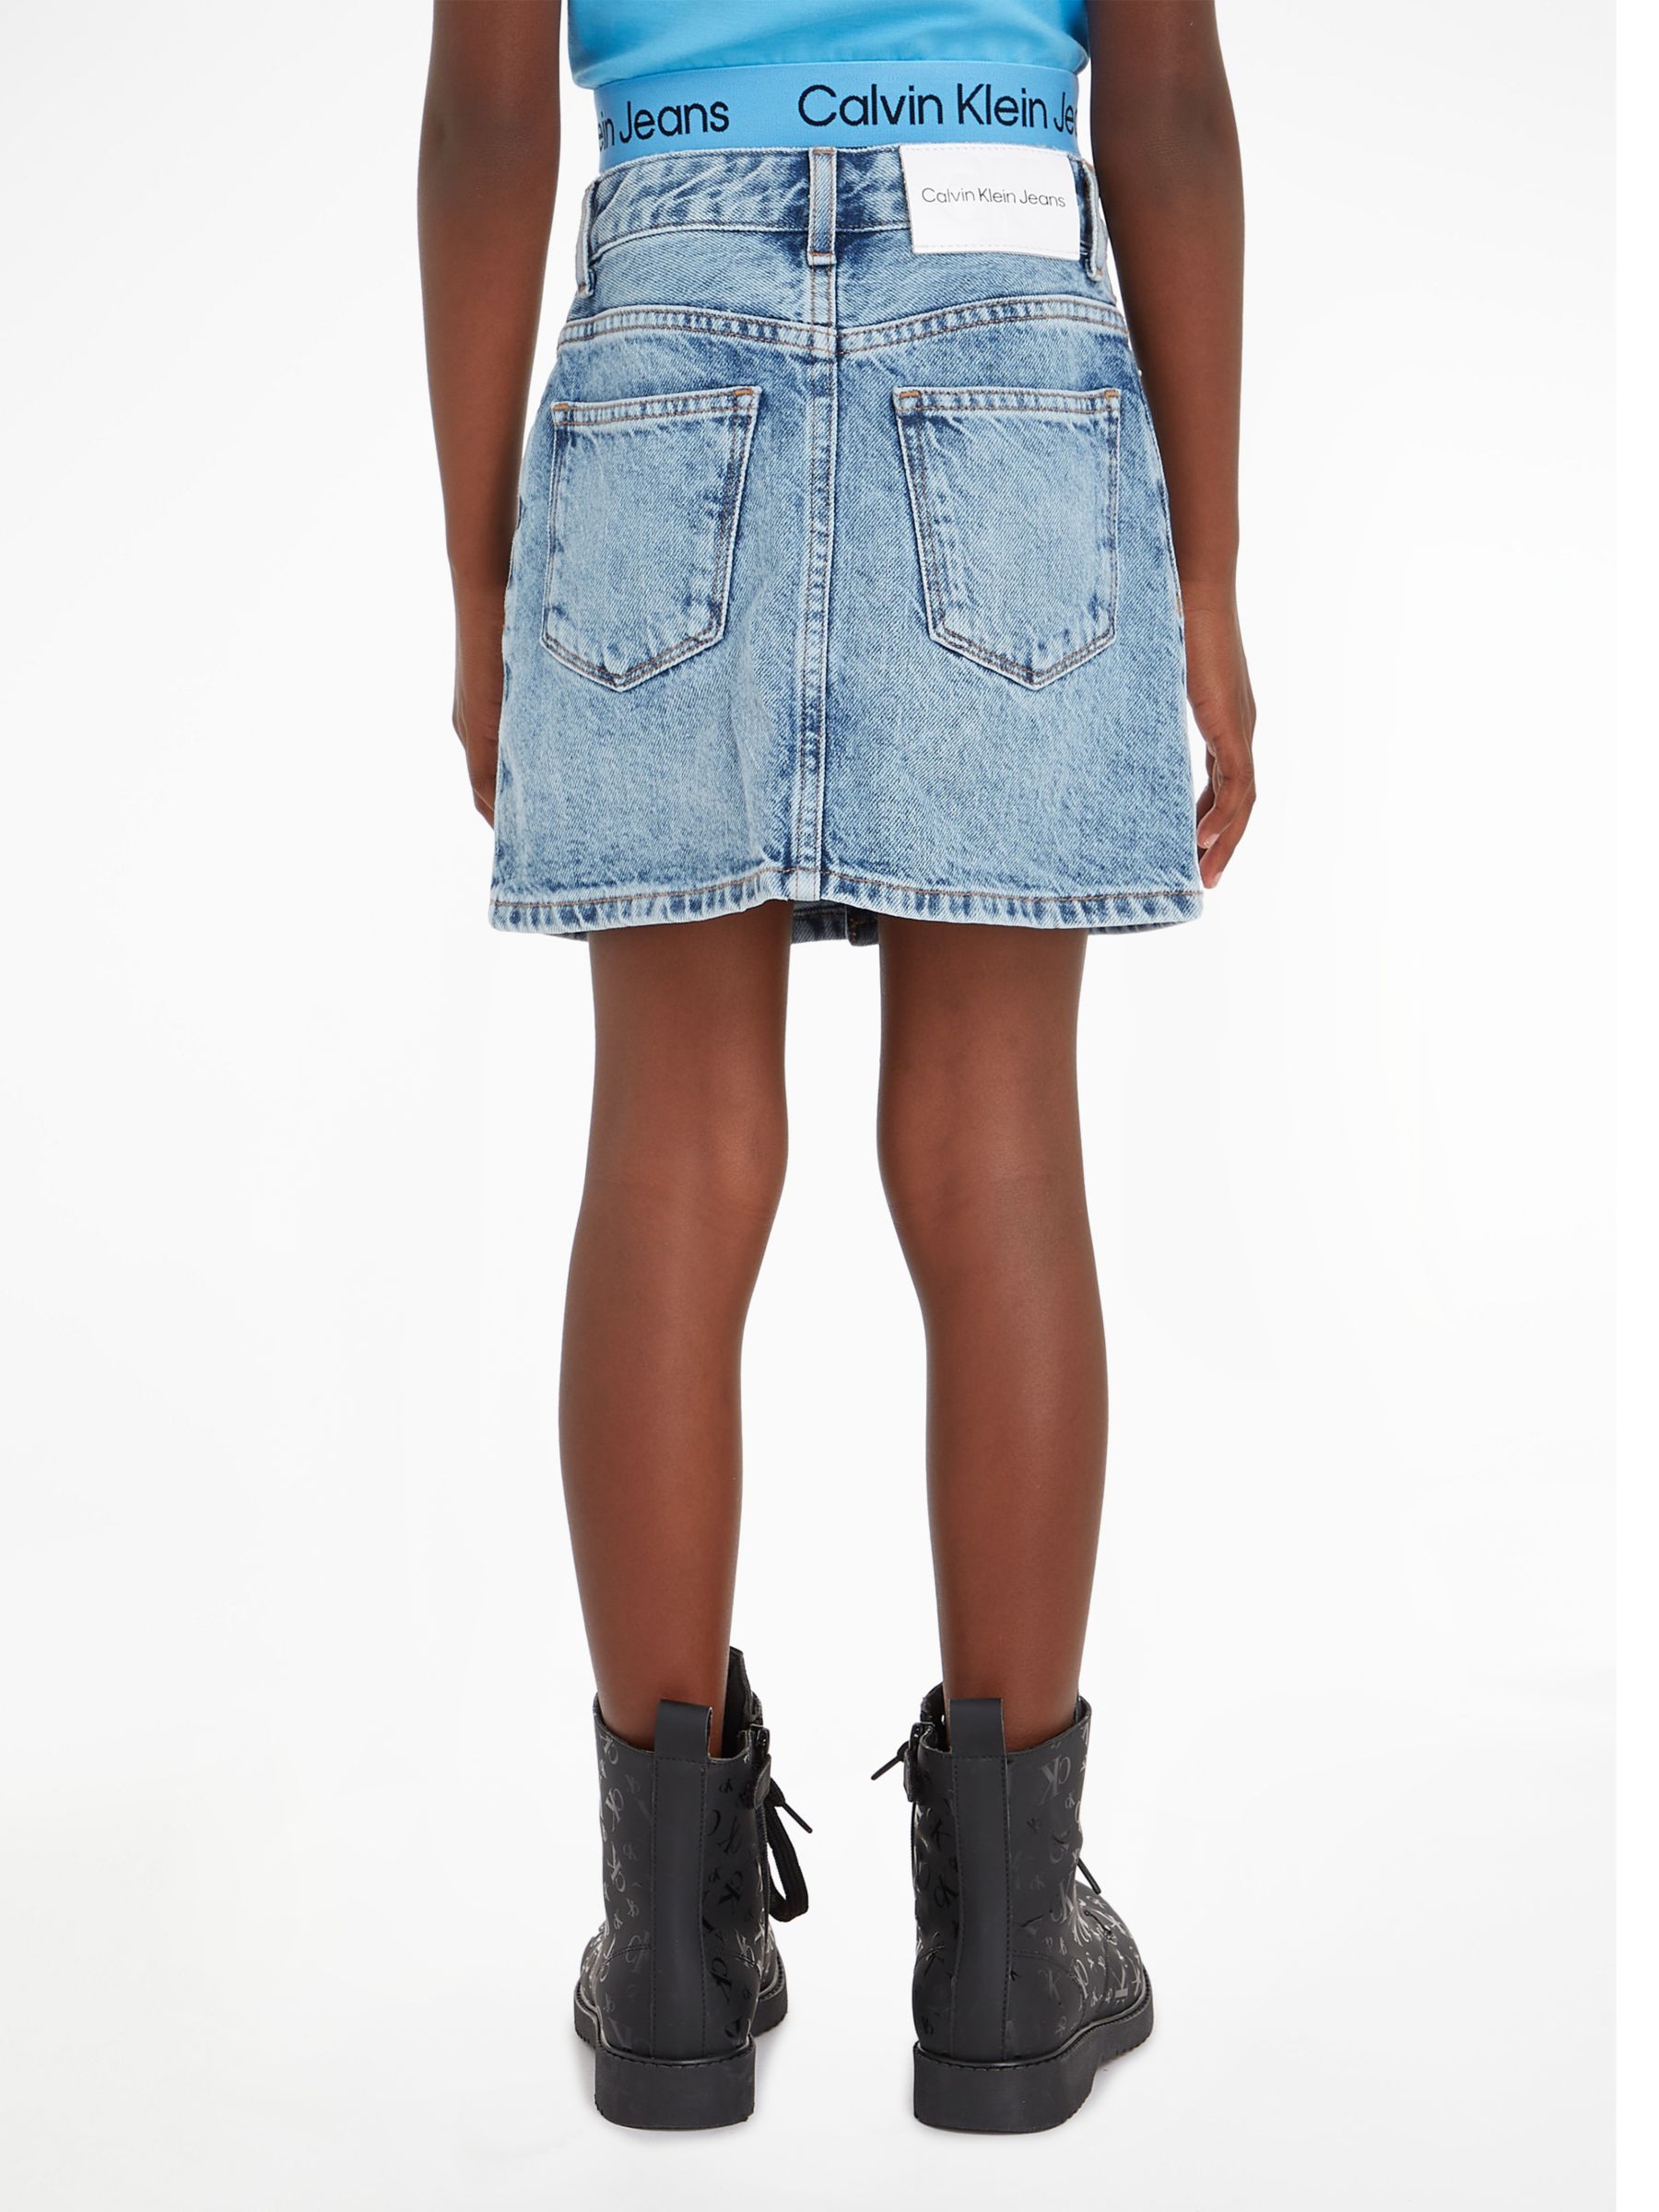 Calvin Klein Kids' Denim Skirt, Denim, 14 yrs